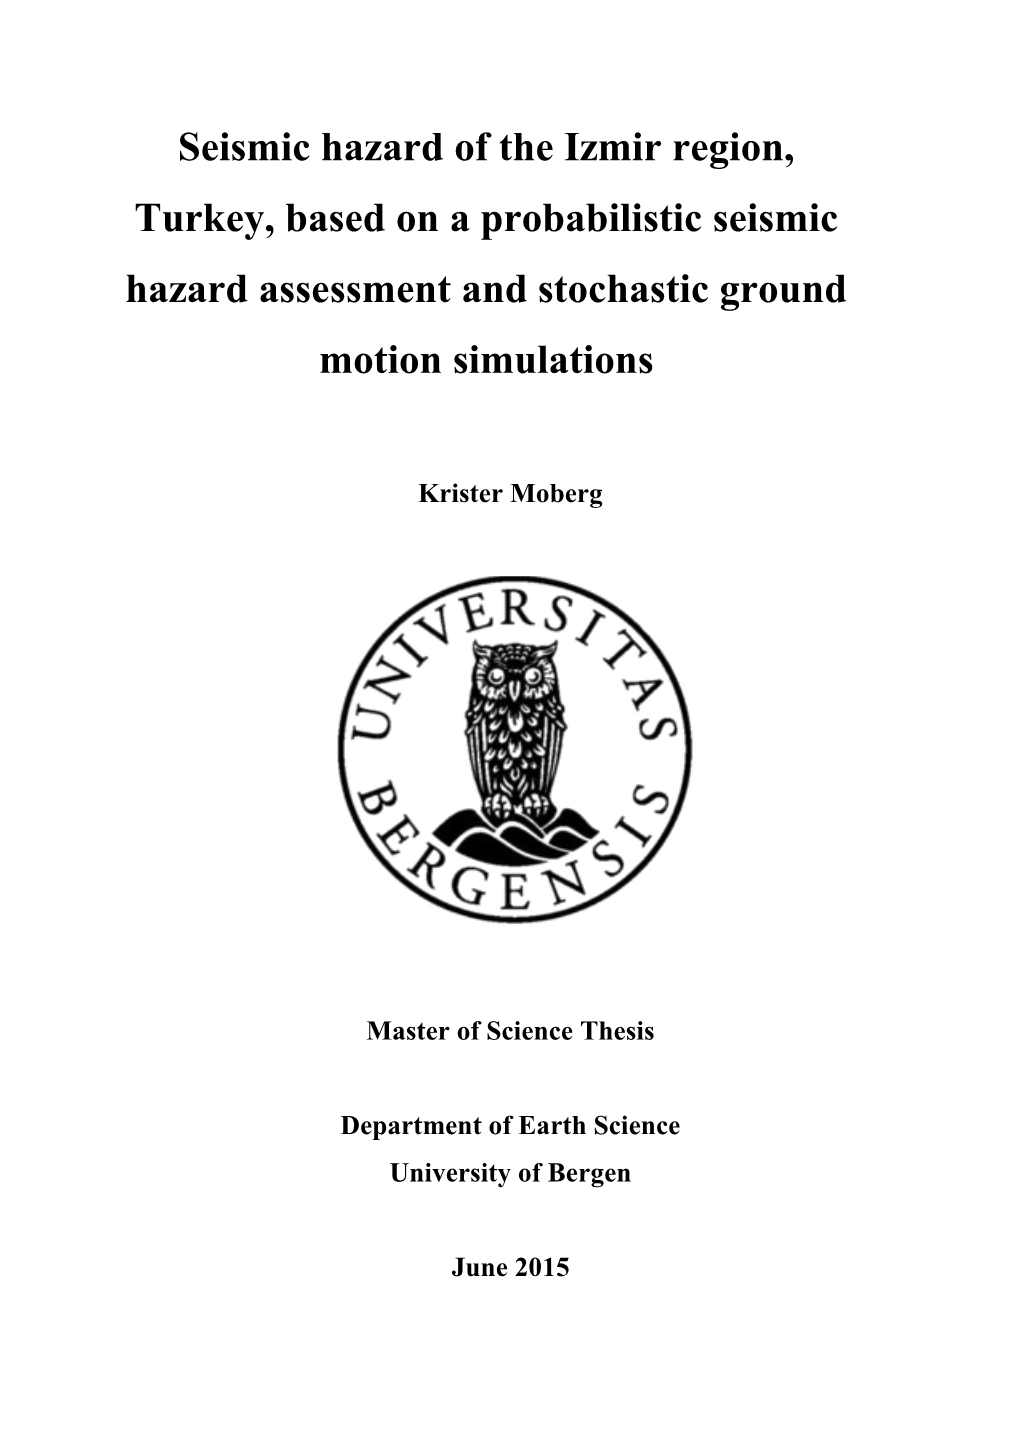 Seismic Hazard of the Izmir Region, Turkey, Based on a Probabilistic Seismic Hazard Assessment and Stochastic Ground Motion Simulations